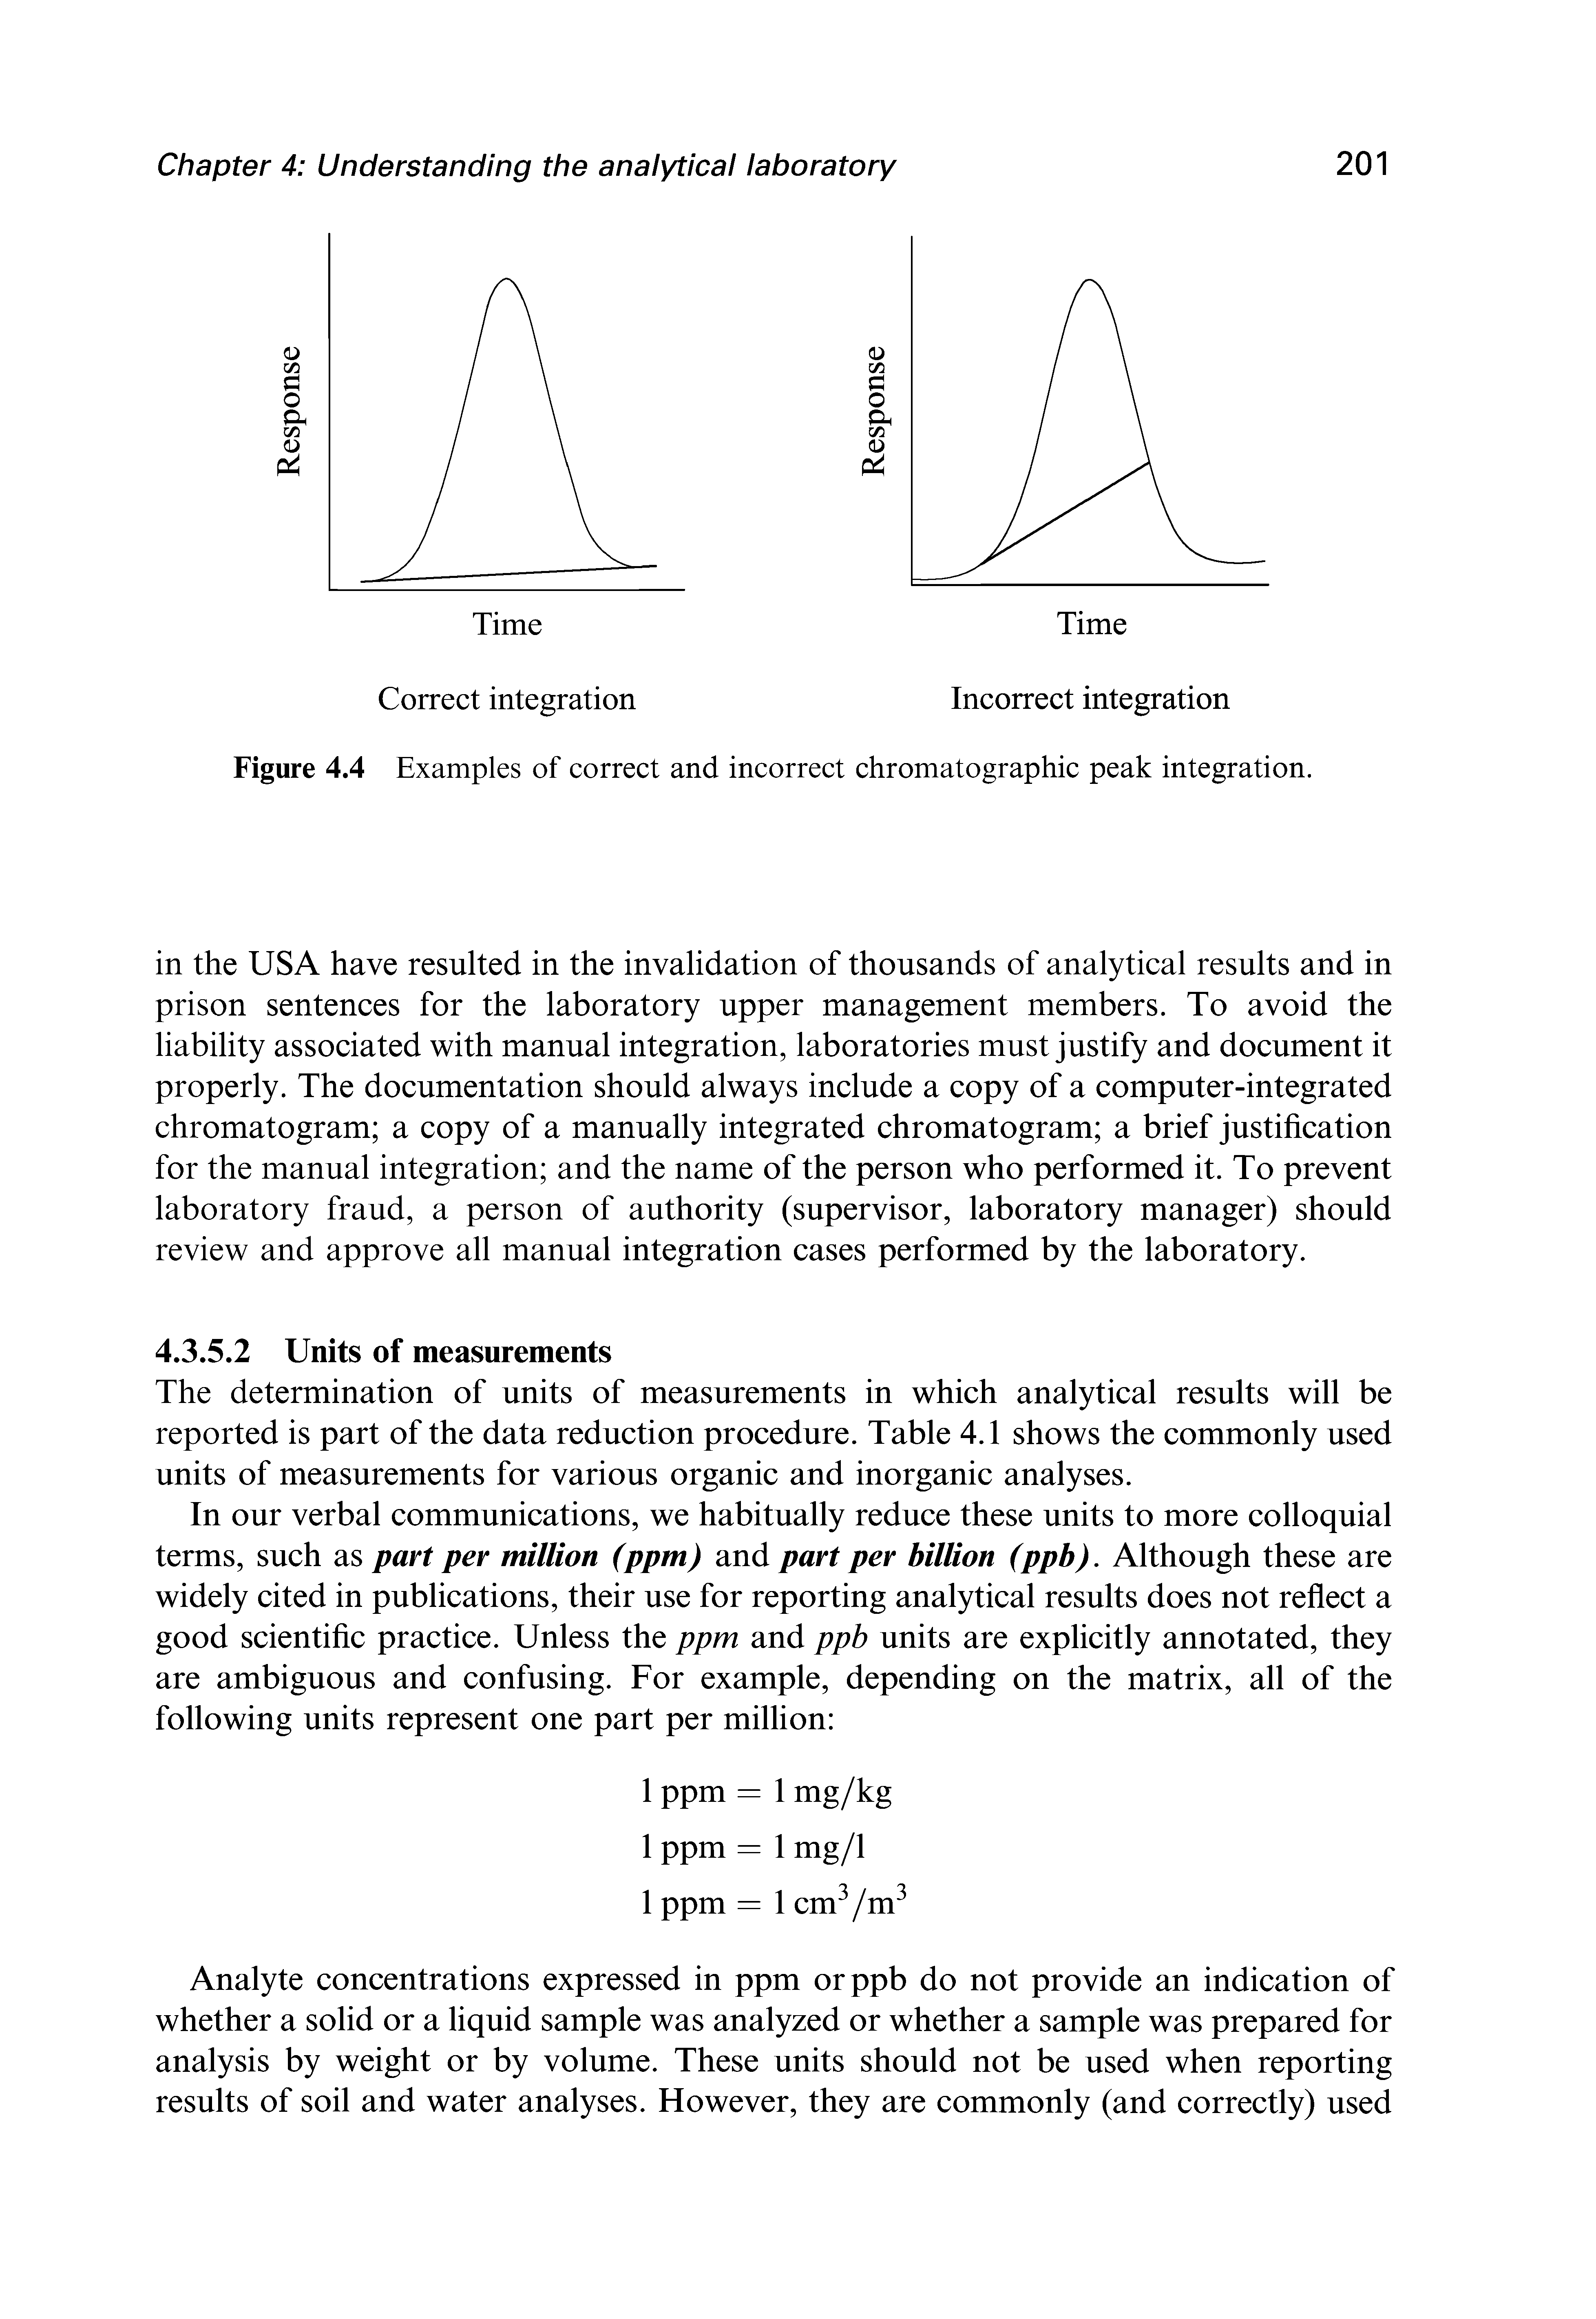 Figure 4.4 Examples of correct and incorrect chromatographic peak integration.